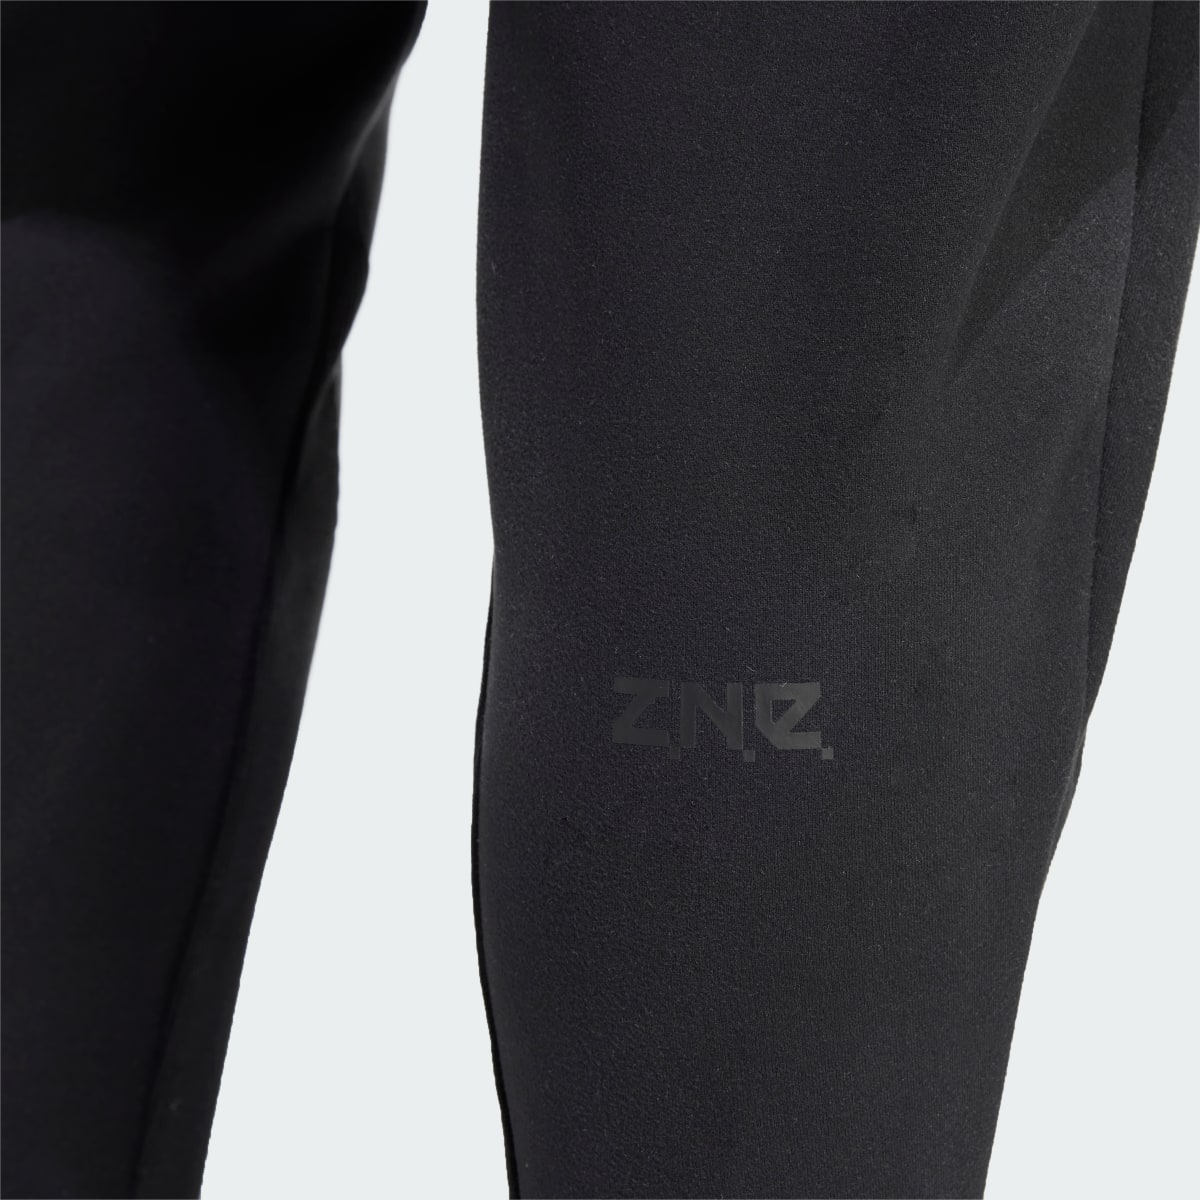 Adidas Z.N.E. Winterized Pants. 5